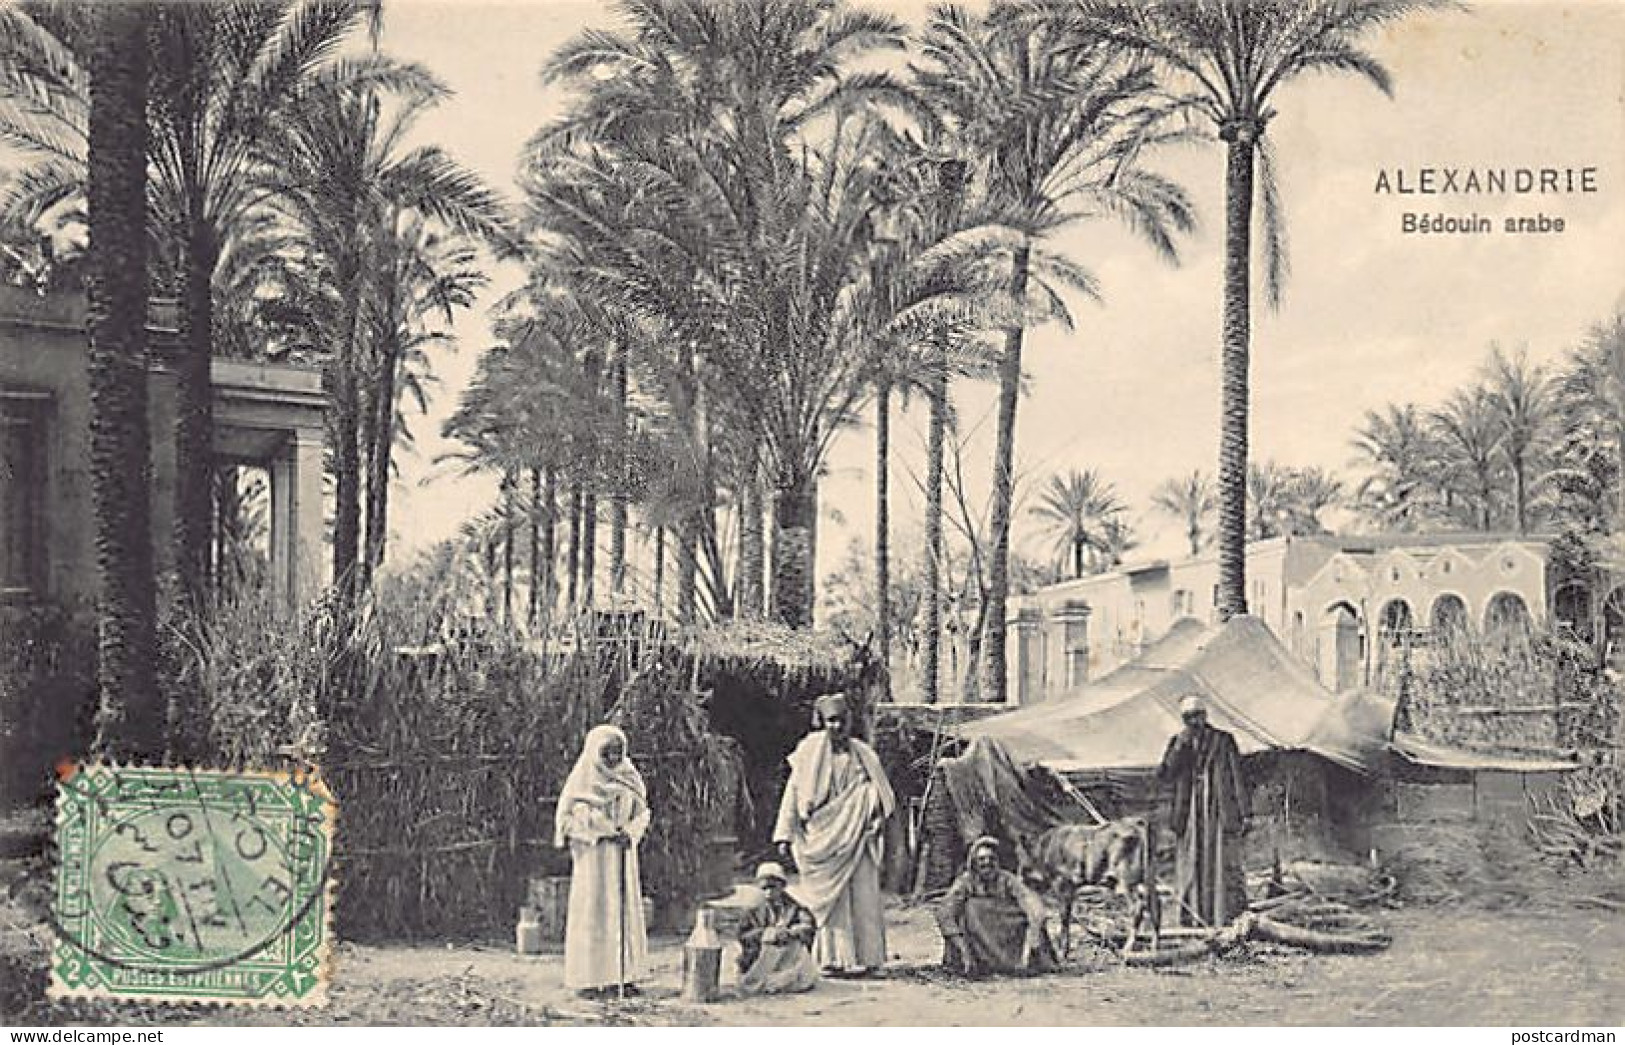 Egypt - ALEXANDRIA - Arab Bedouin - Publ. Dr. Trenkler Co. Ala. 36 - Alexandria